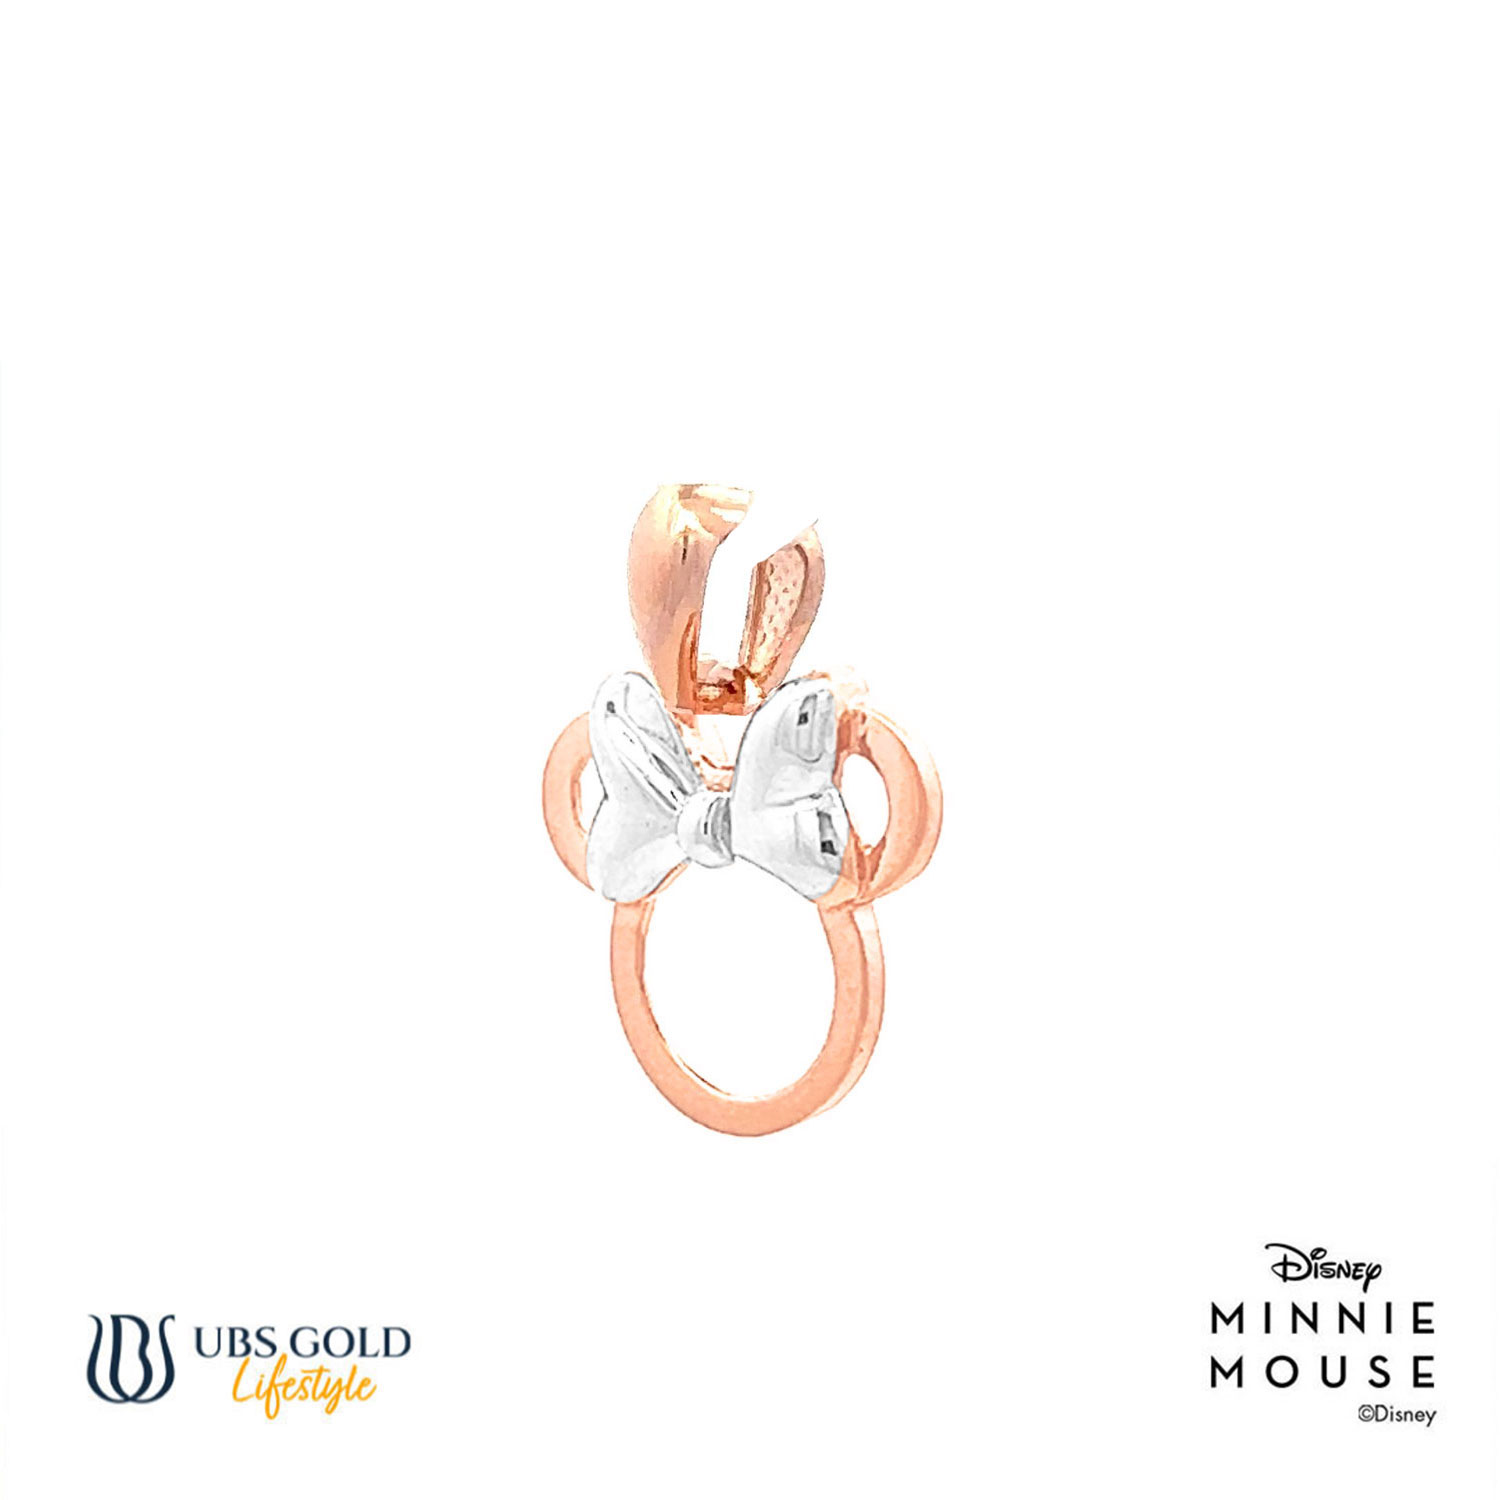 UBS Gold Liontin Emas Disney Minnie Mouse - Cly0024B - 17K